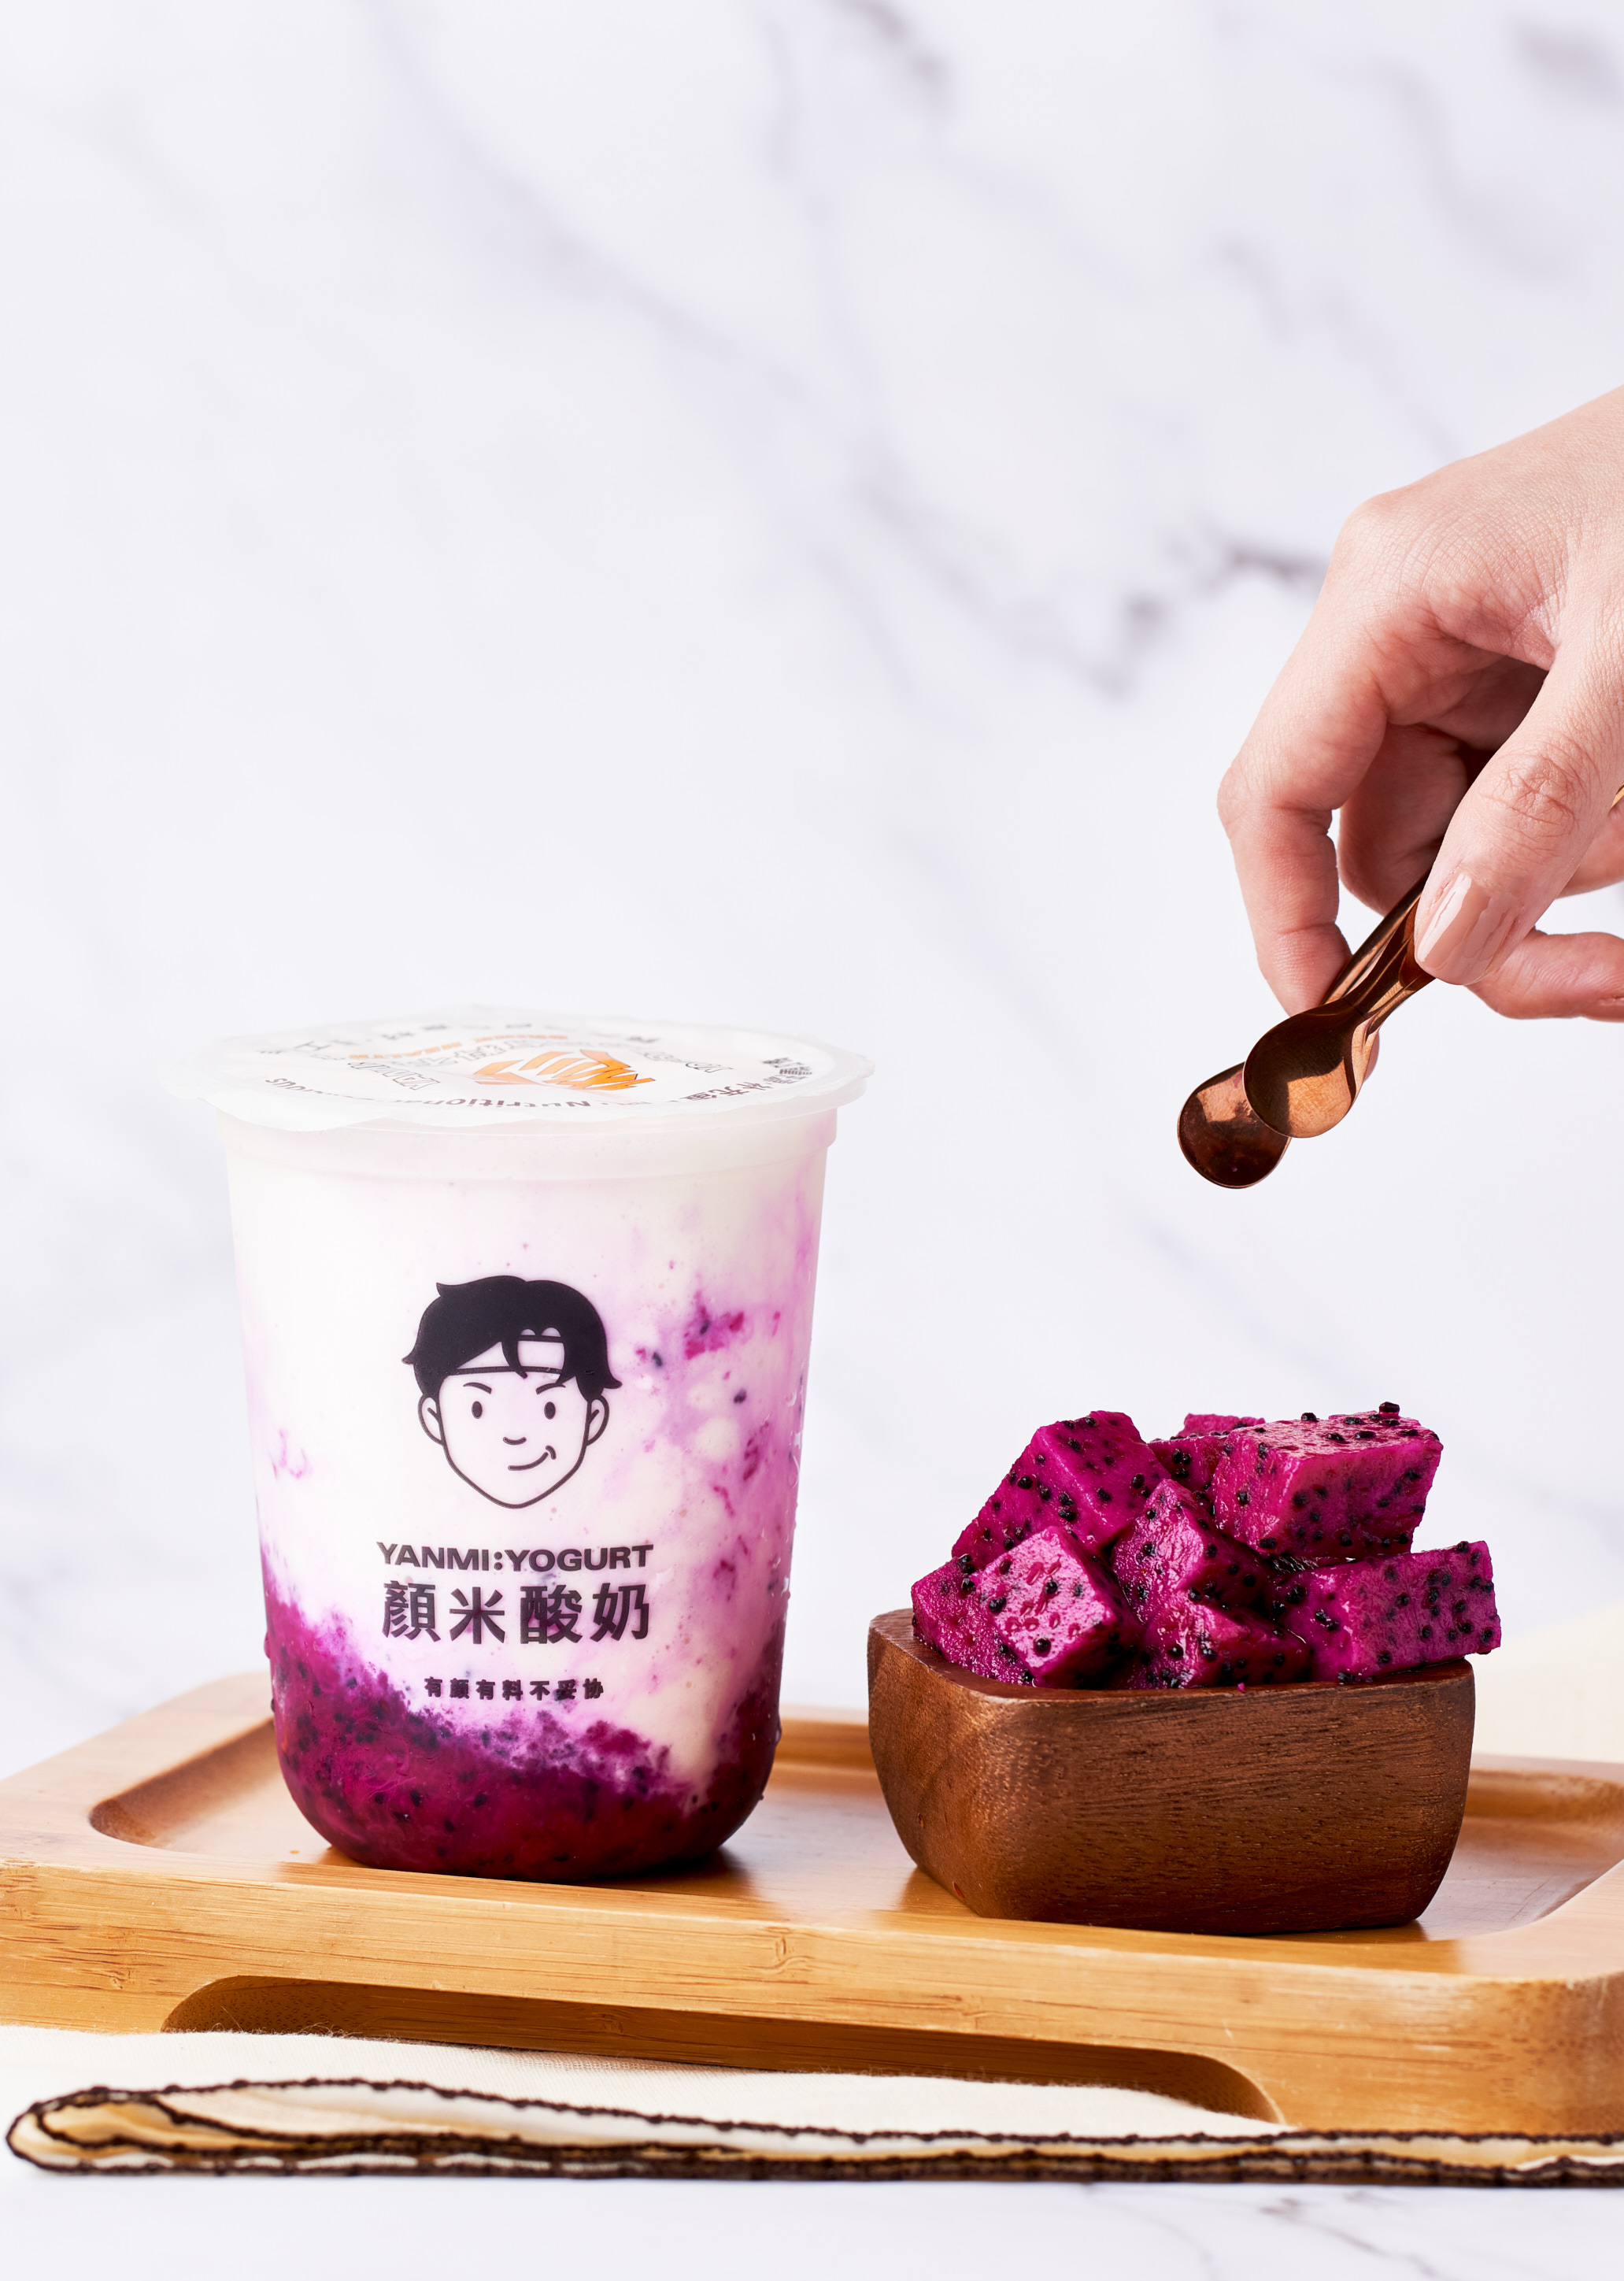 Popular yogurt drink store, Yanmi Yogurt (颜米酸奶), to offer 1-for-1 yogurt drinks from 26 to 28 Oct 19 - 1